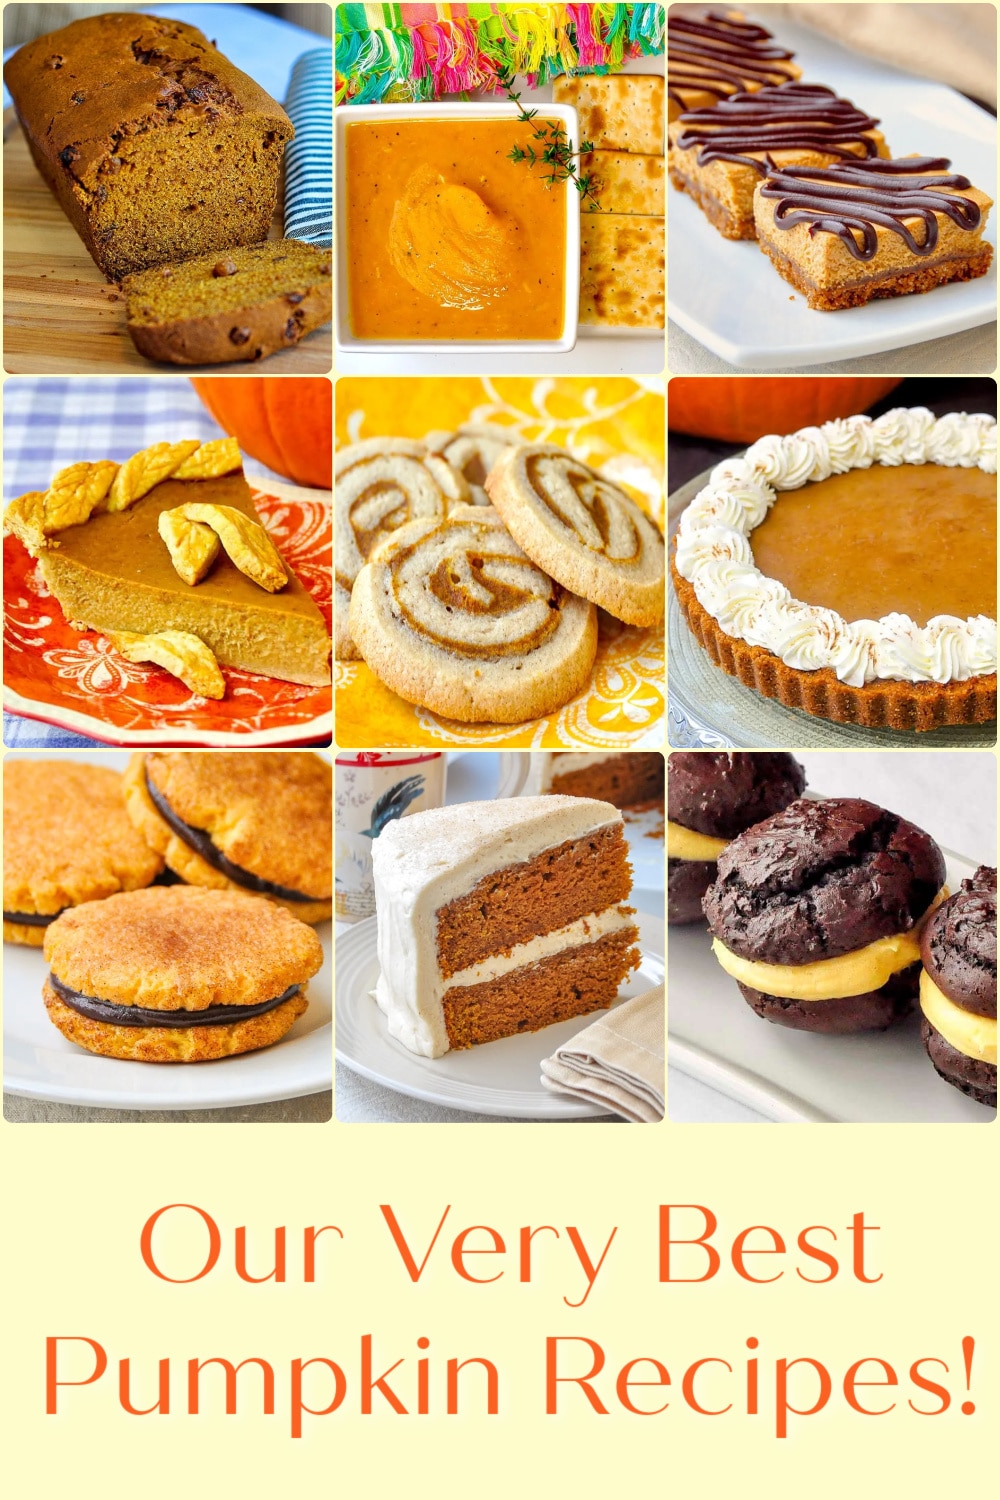 Best Pumpkin Recipes collage for Pinterest